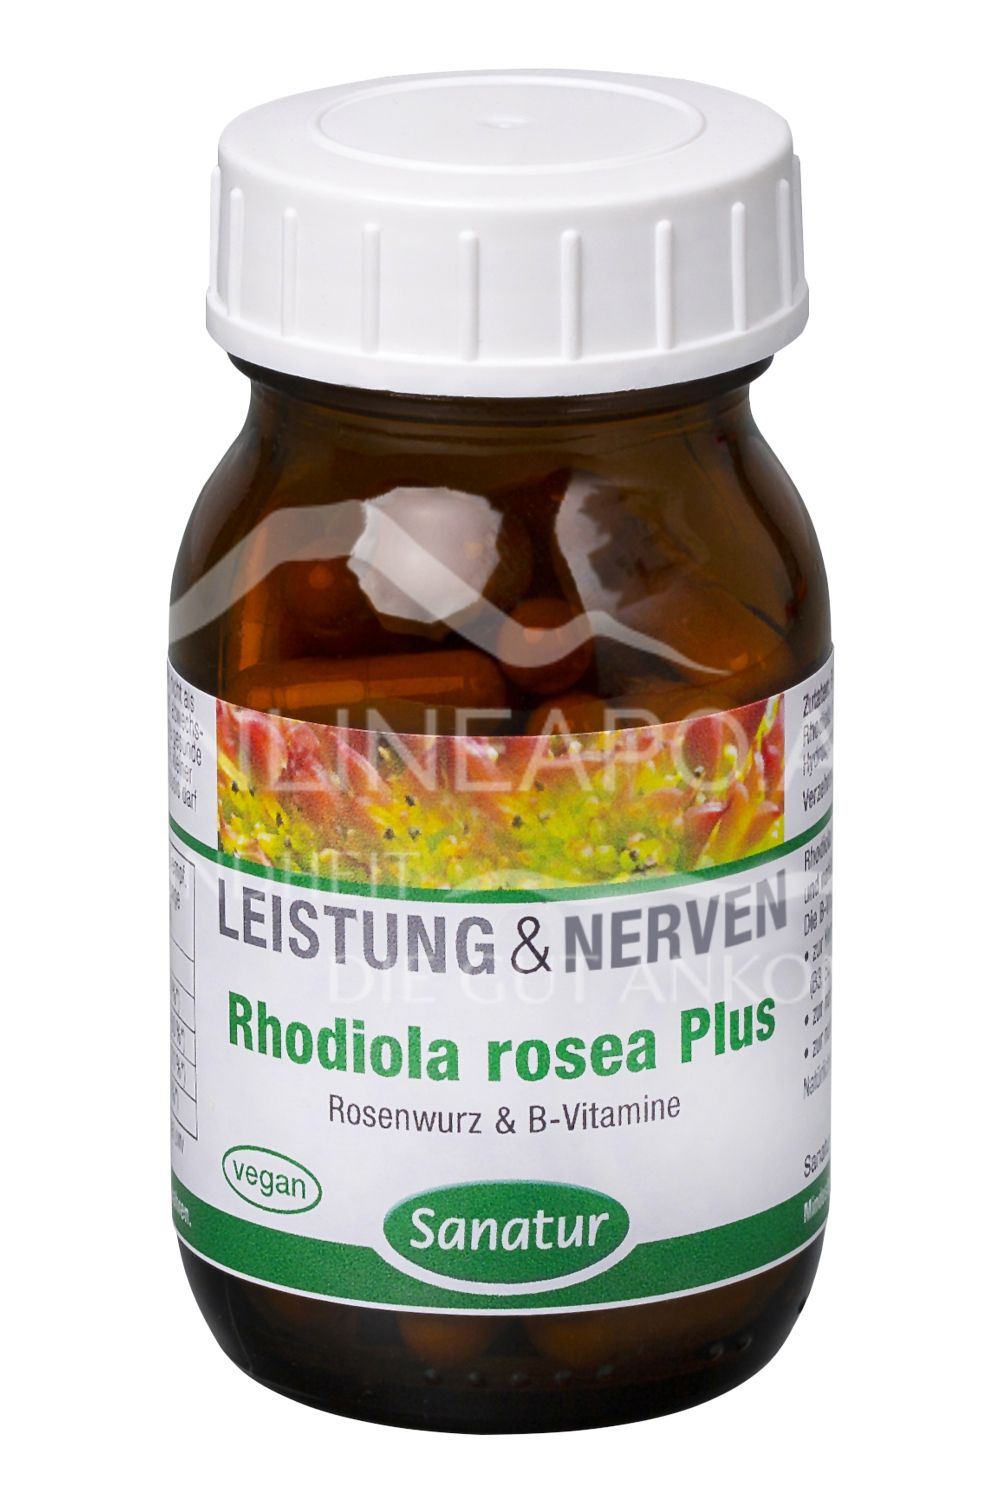 Sanatur Rhodiola rosea Plus Kapseln